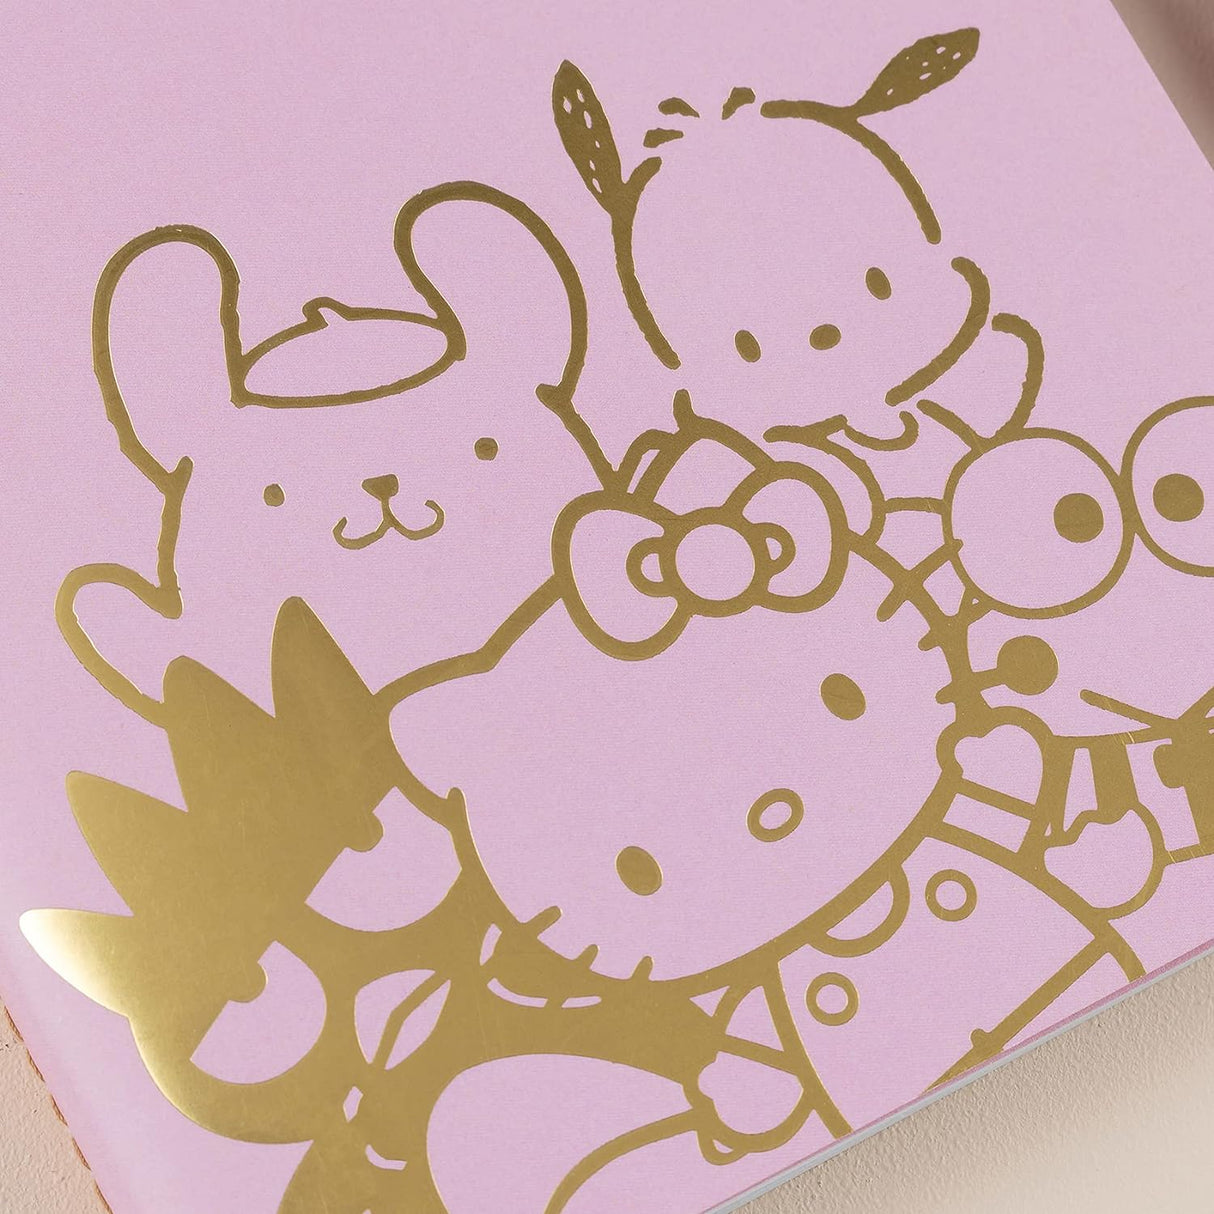 Erin Condren Hello Kitty & Friends Petite Notebook - Lined